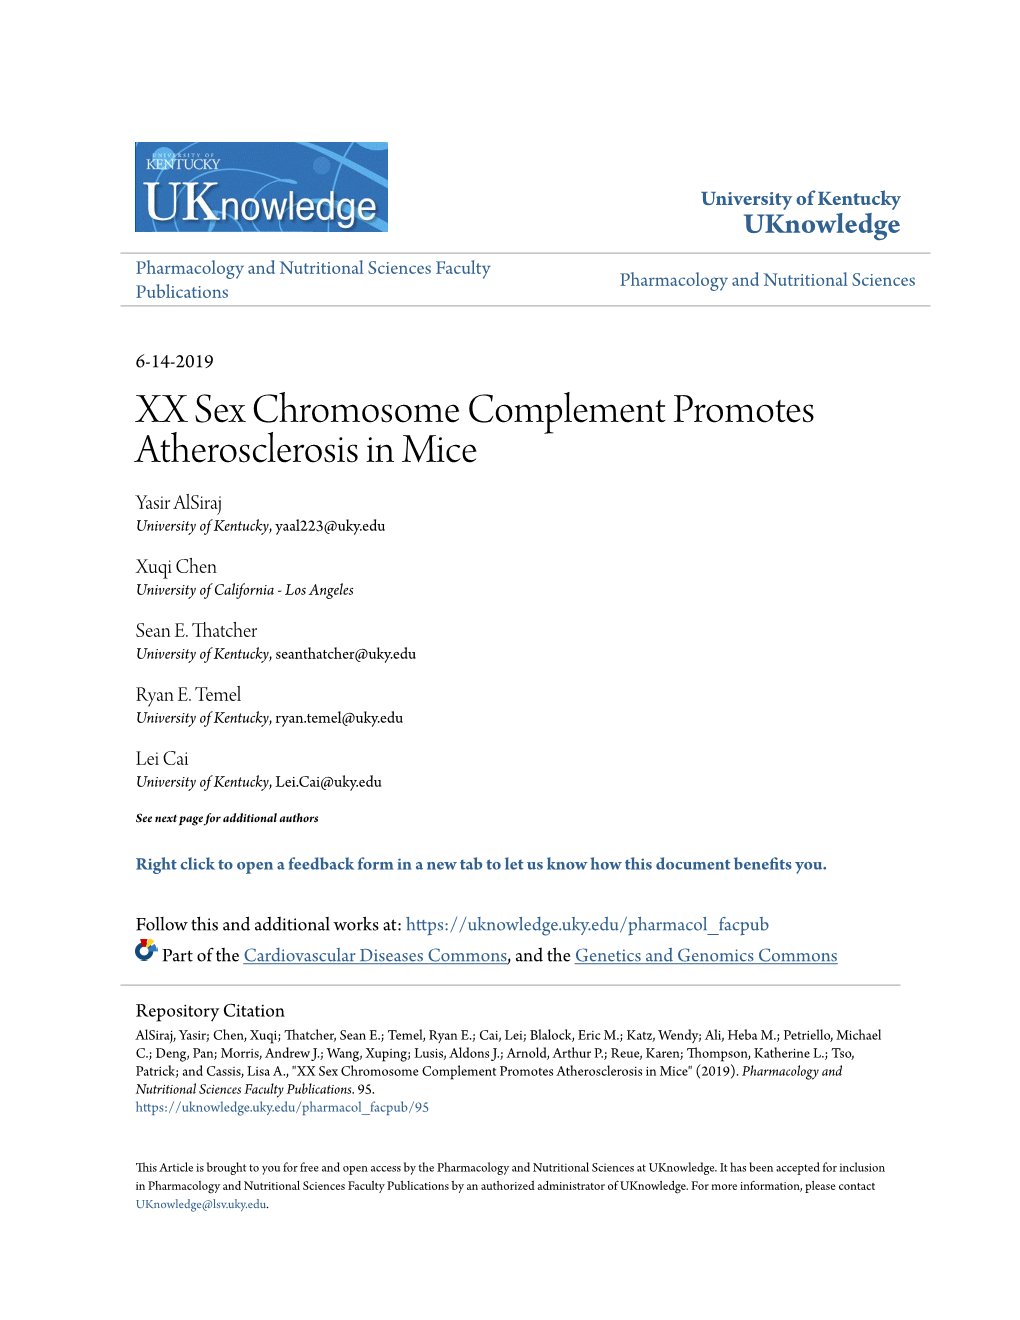 XX Sex Chromosome Complement Promotes Atherosclerosis in Mice Yasir Alsiraj University of Kentucky, Yaal223@Uky.Edu